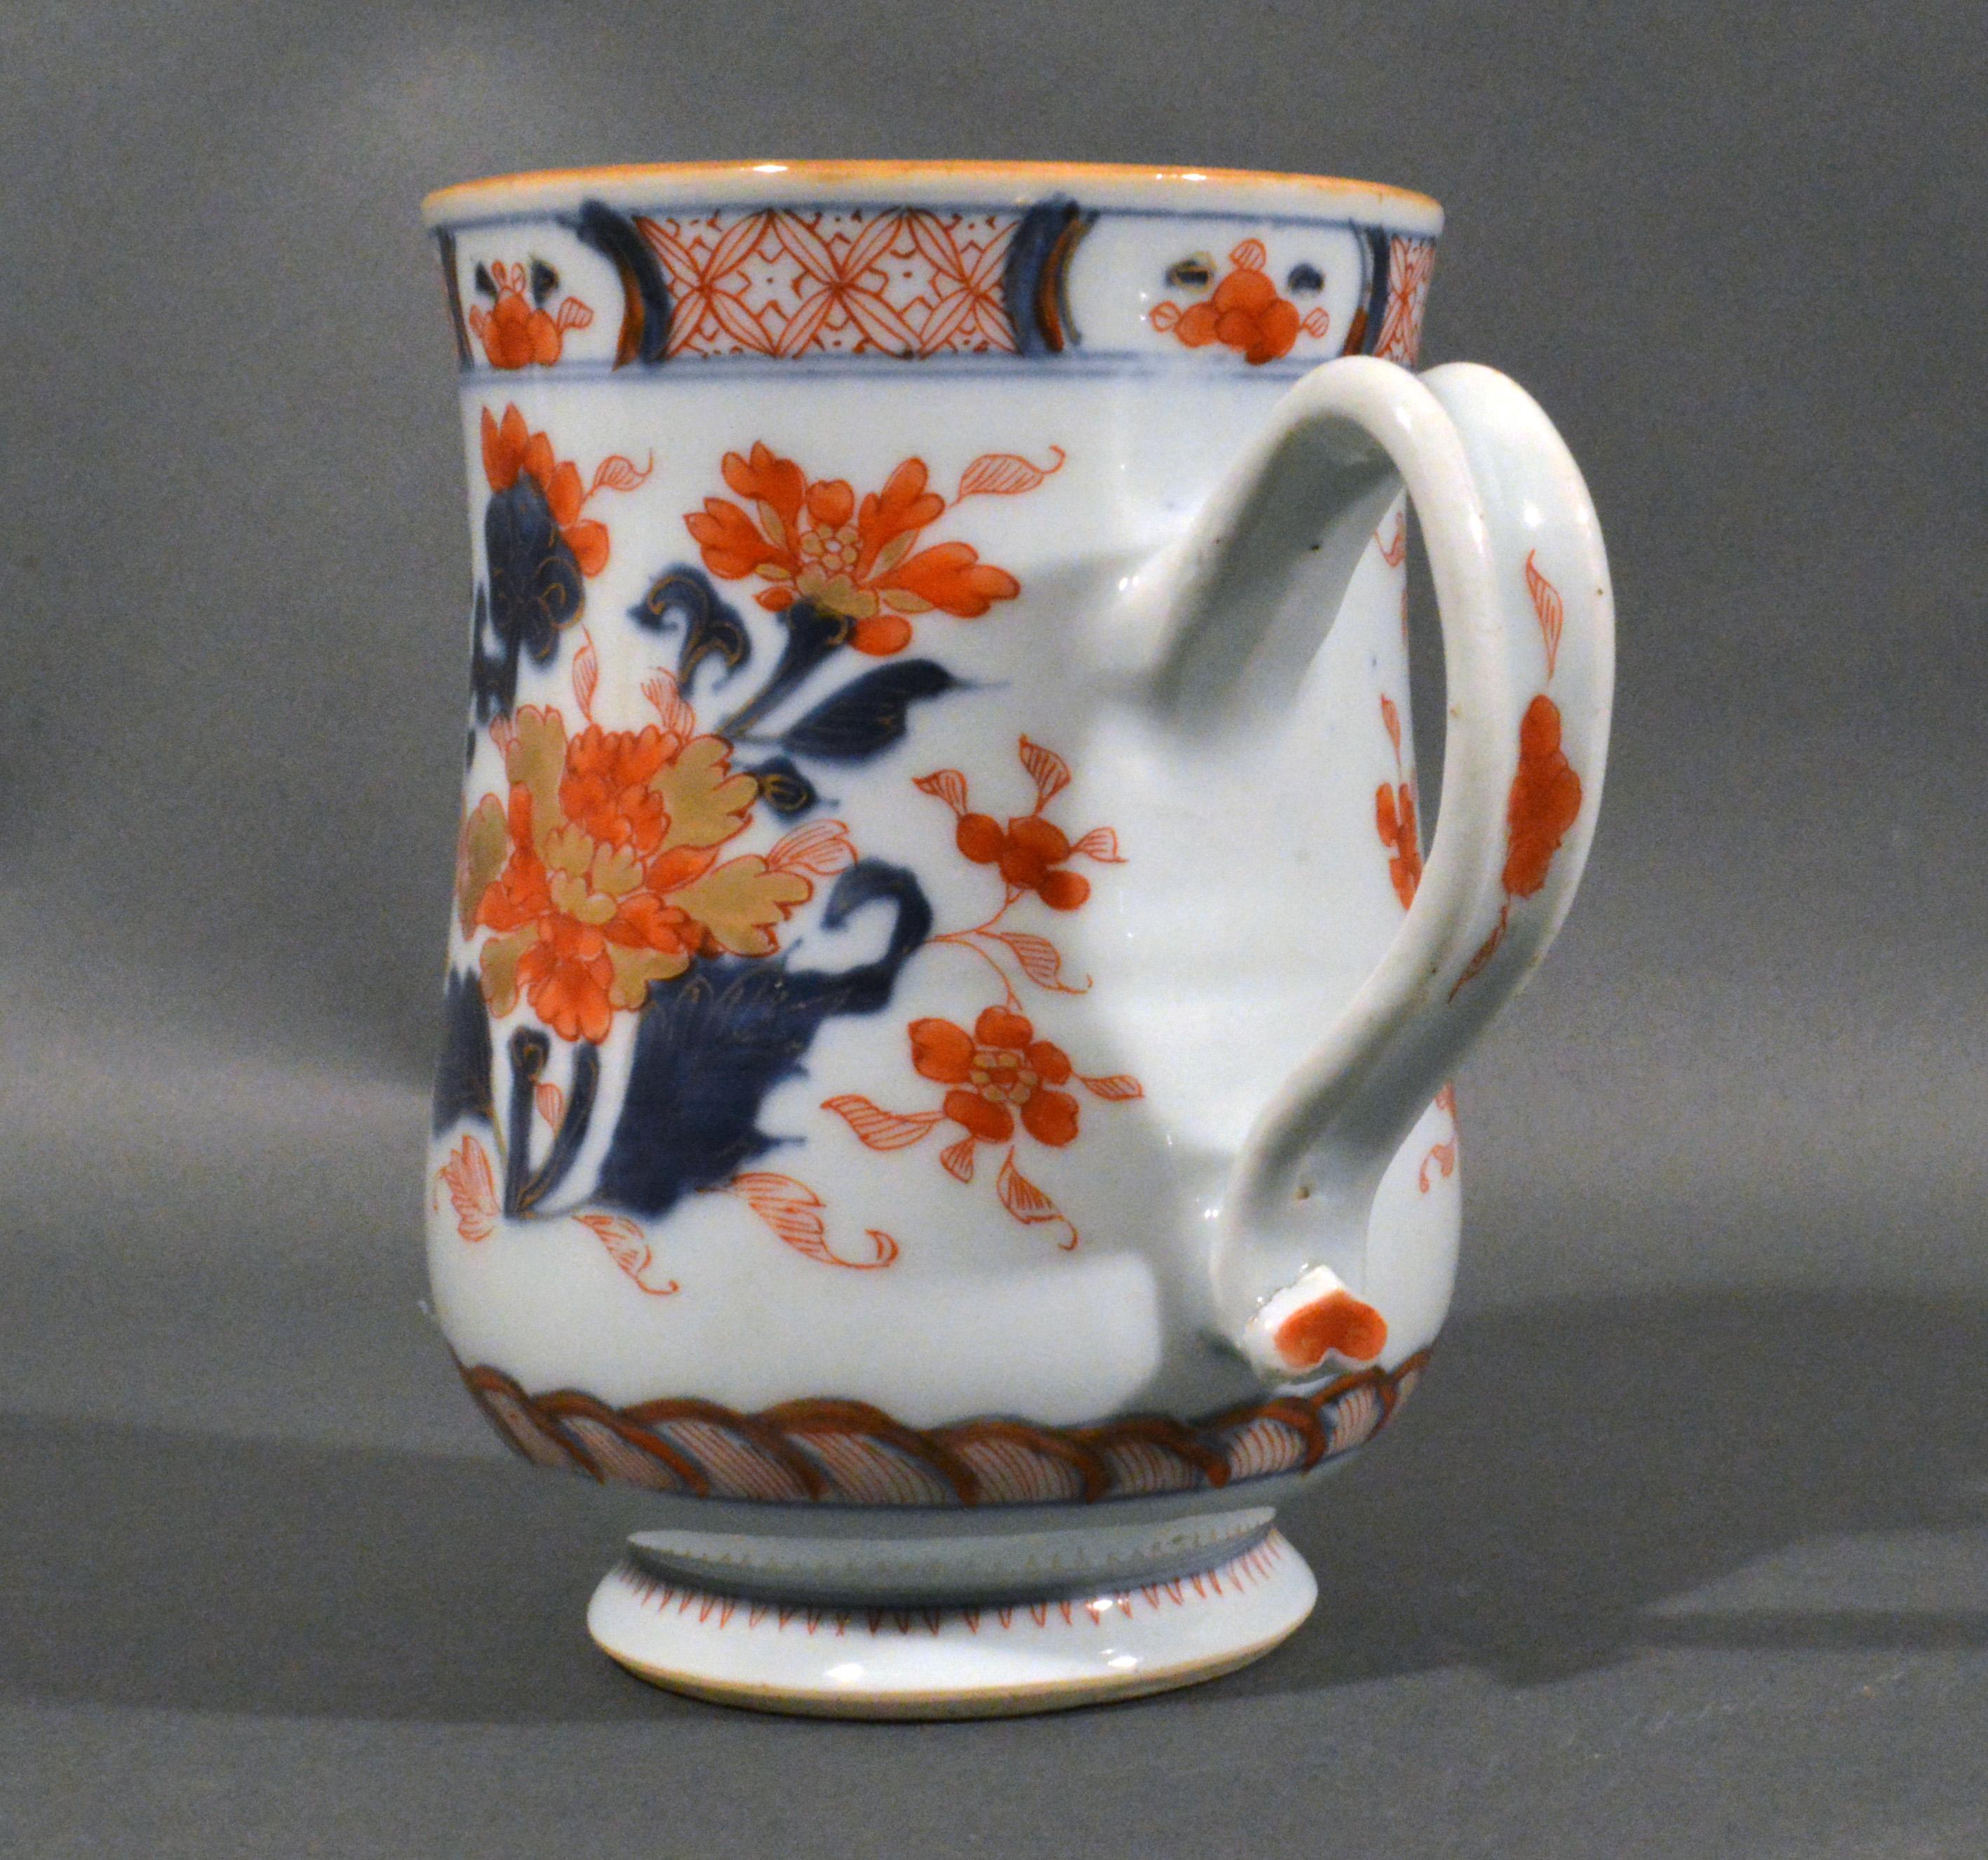 18th Century Chinese Export Porcelain Imari Bell-Shaped Large Tankard, circa 1740